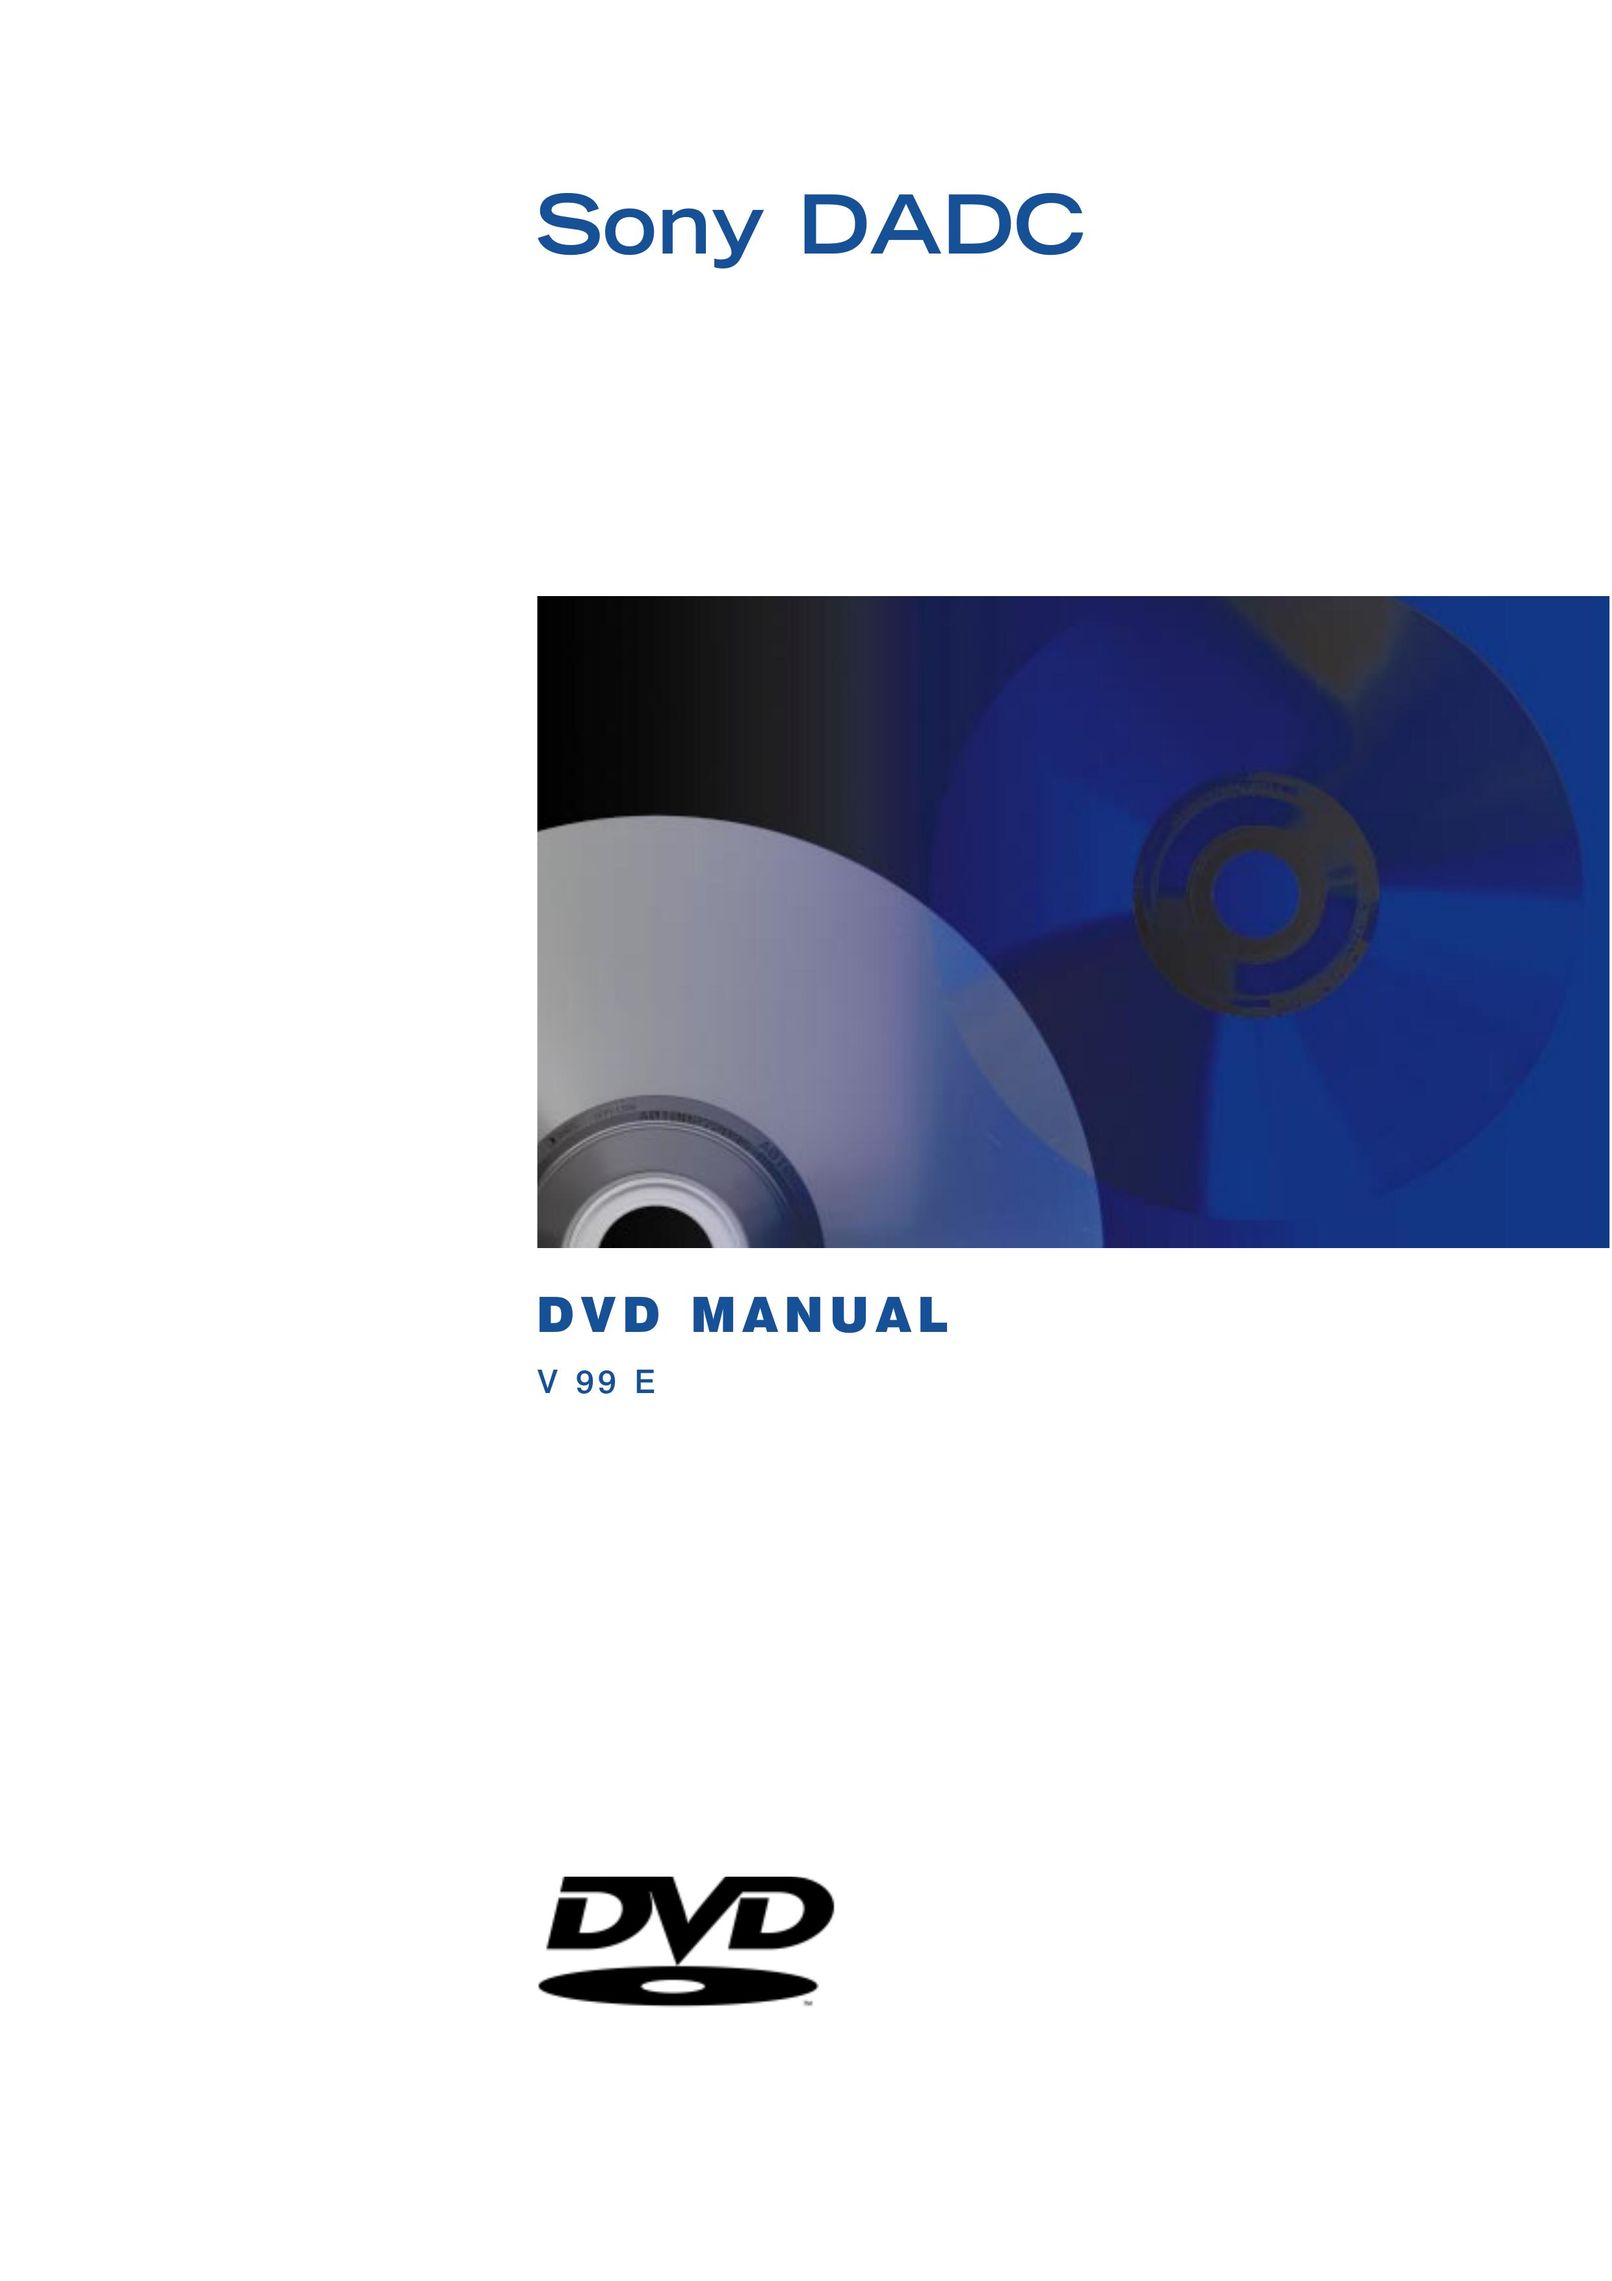 Sony DADC DVD Player User Manual